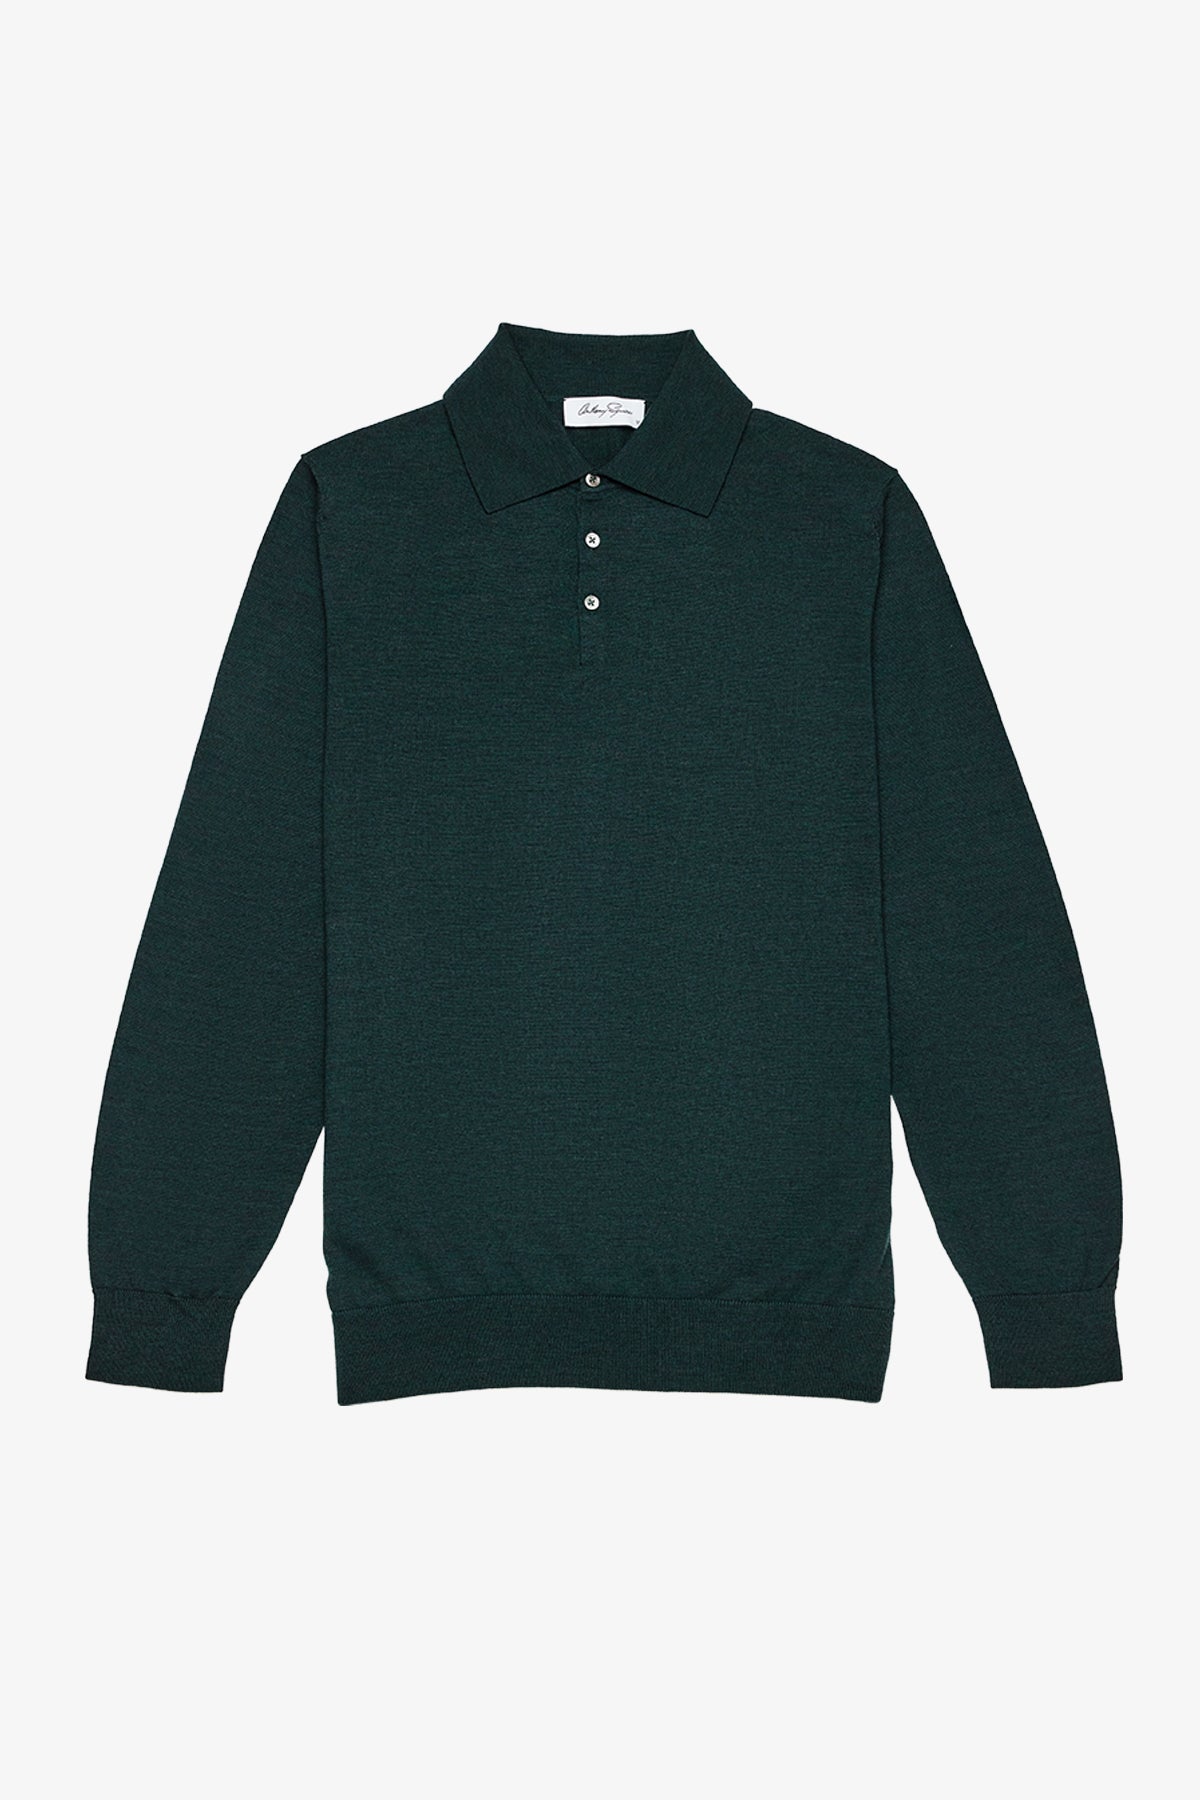 Kelvin - Green Long Sleeve Knit Polo